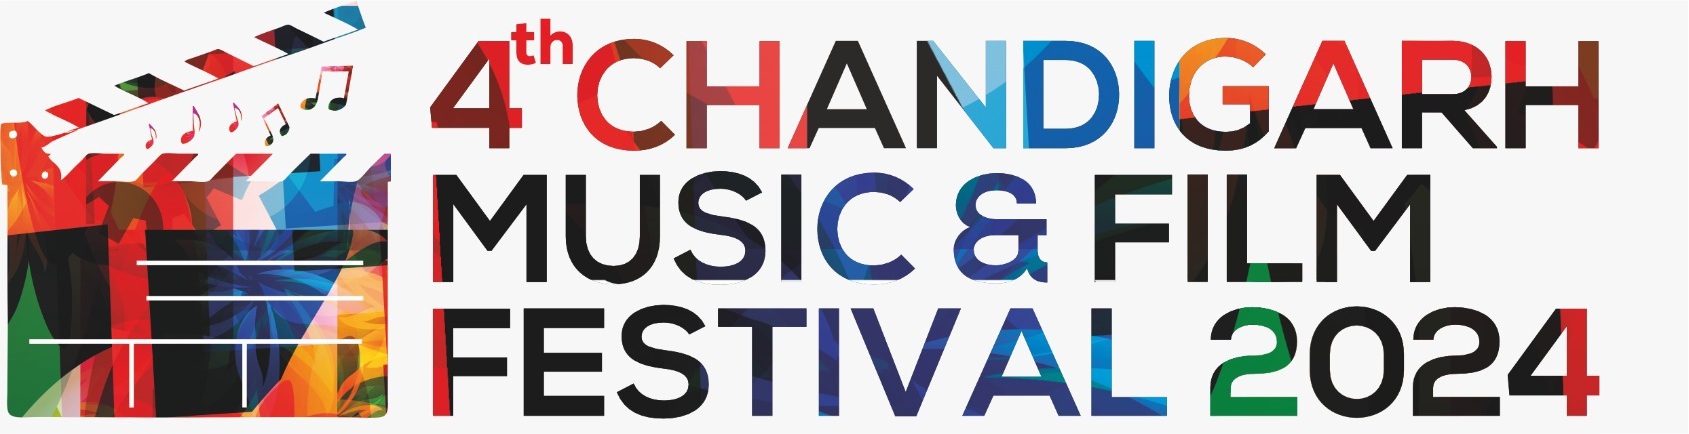 Chandigarh Music & Film Festival